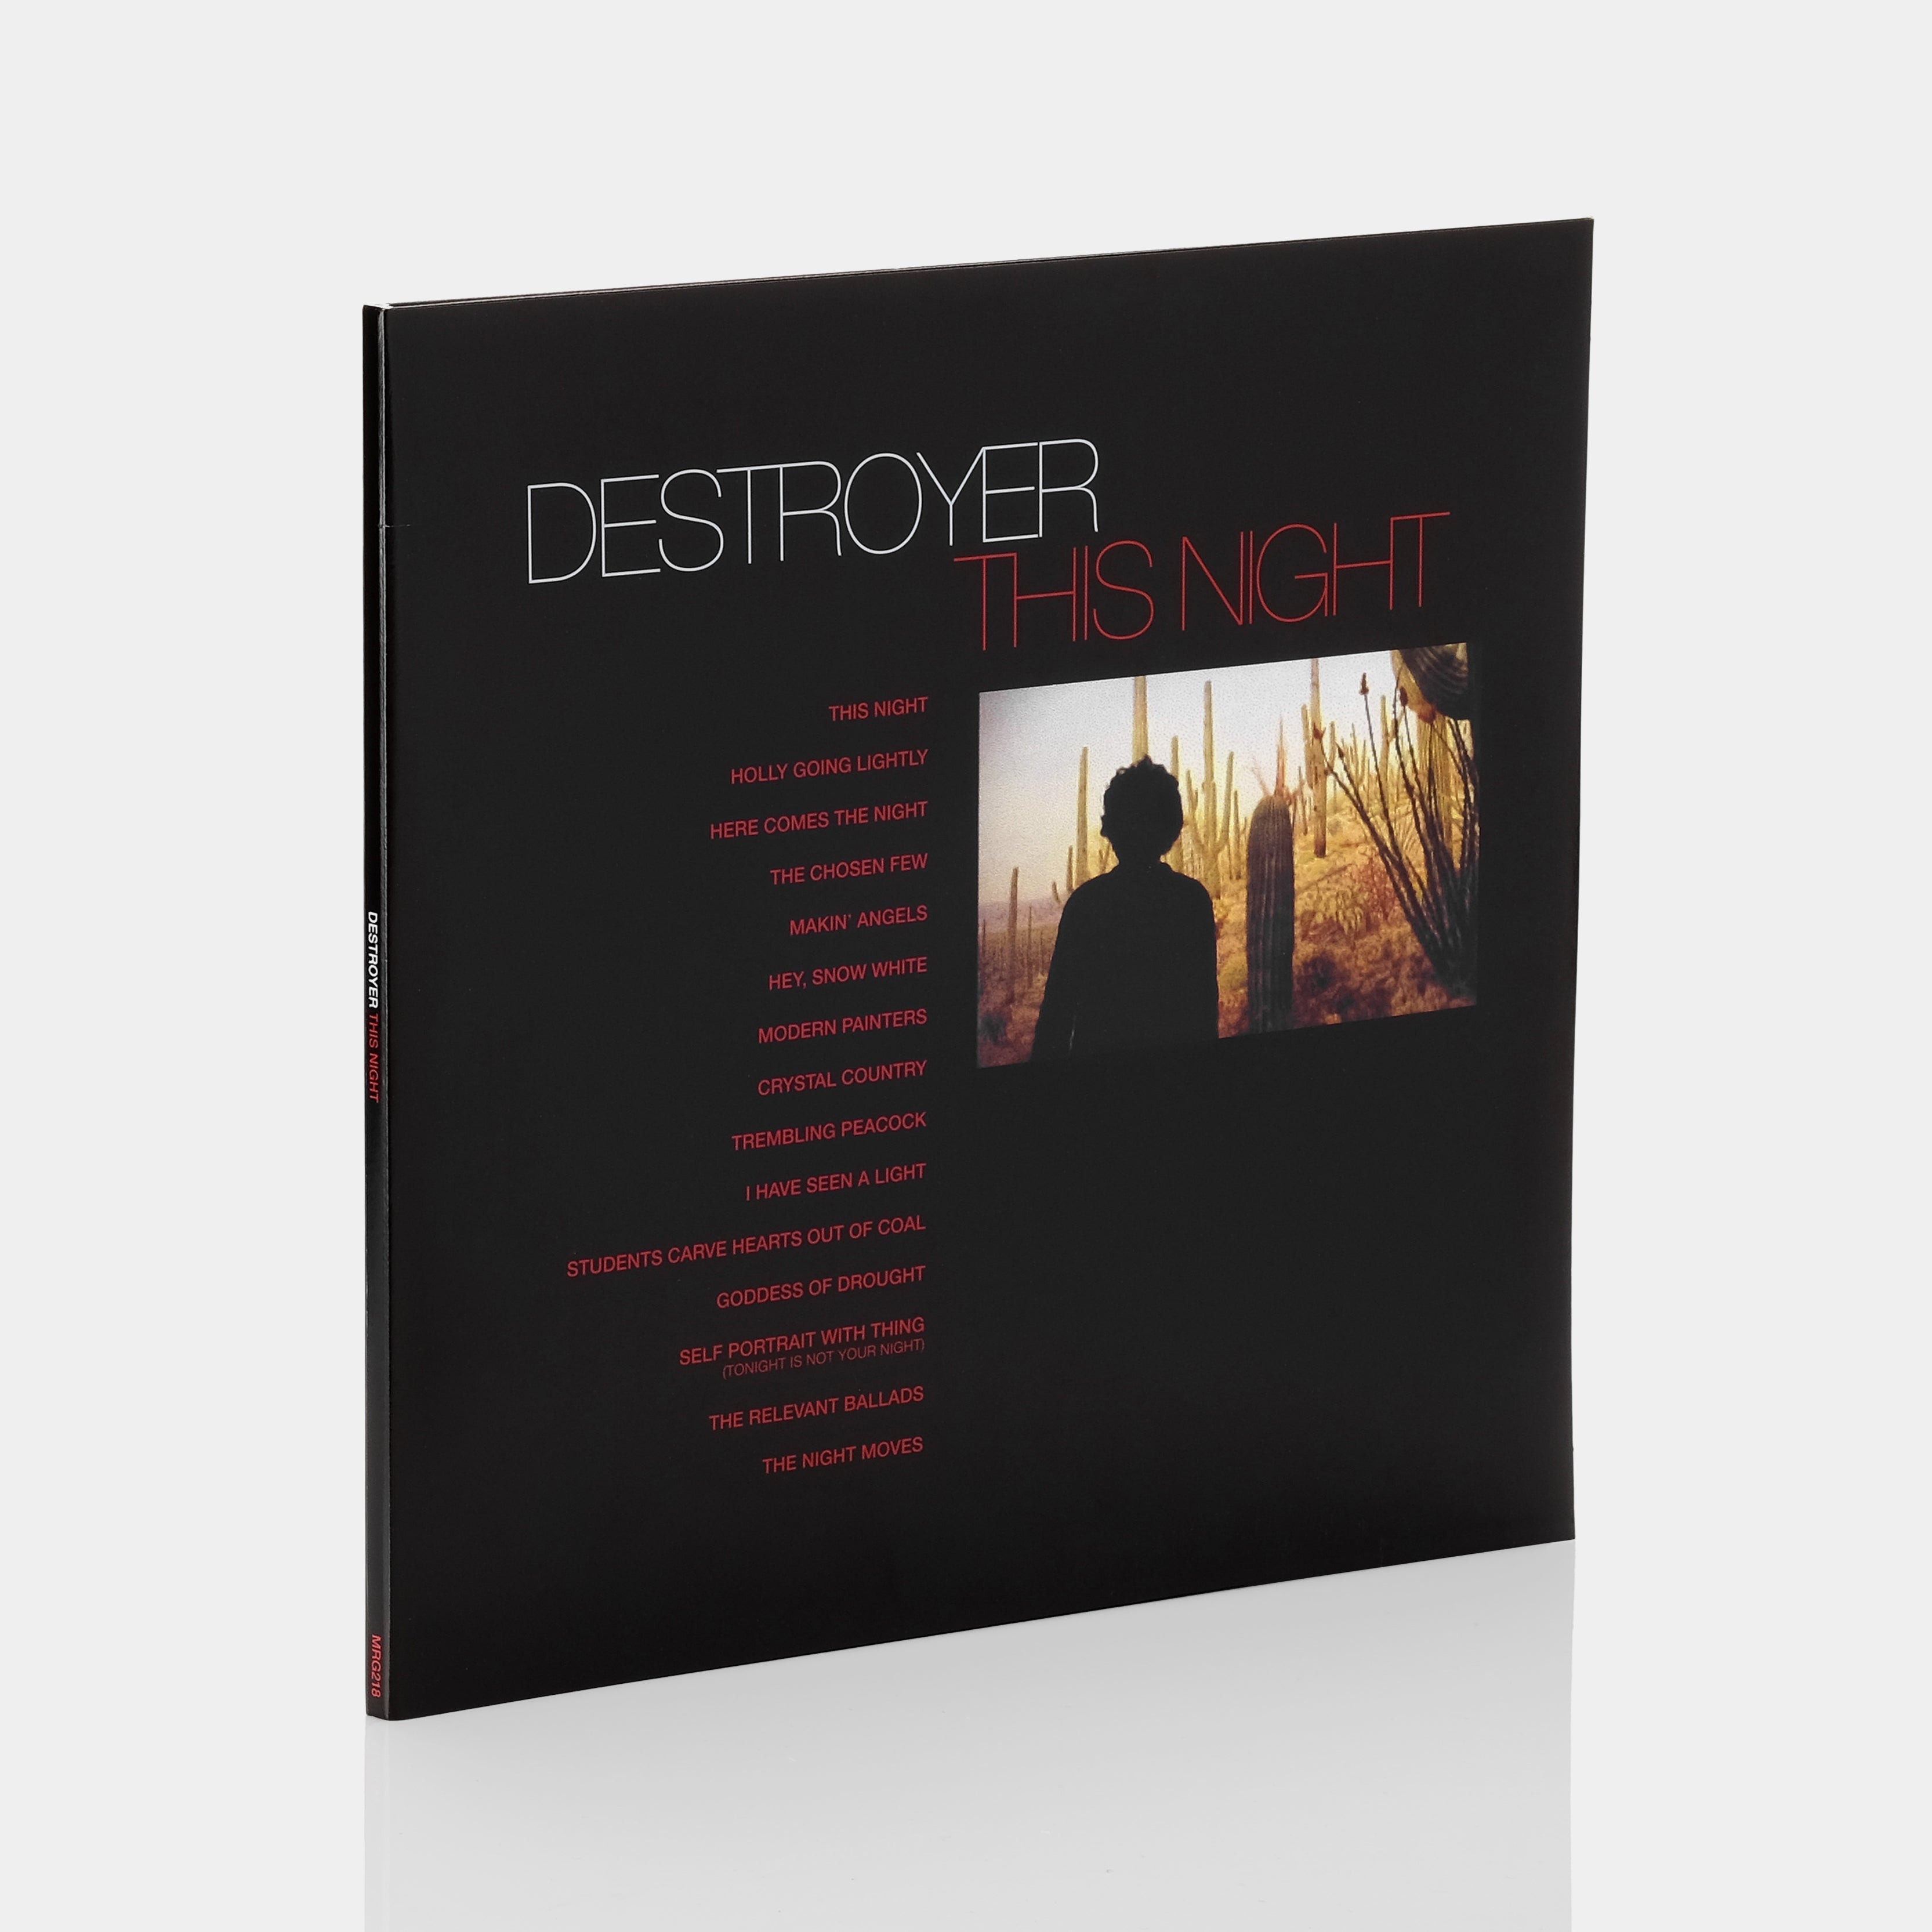 Destroyer - This Night 2xLP Vinyl Record